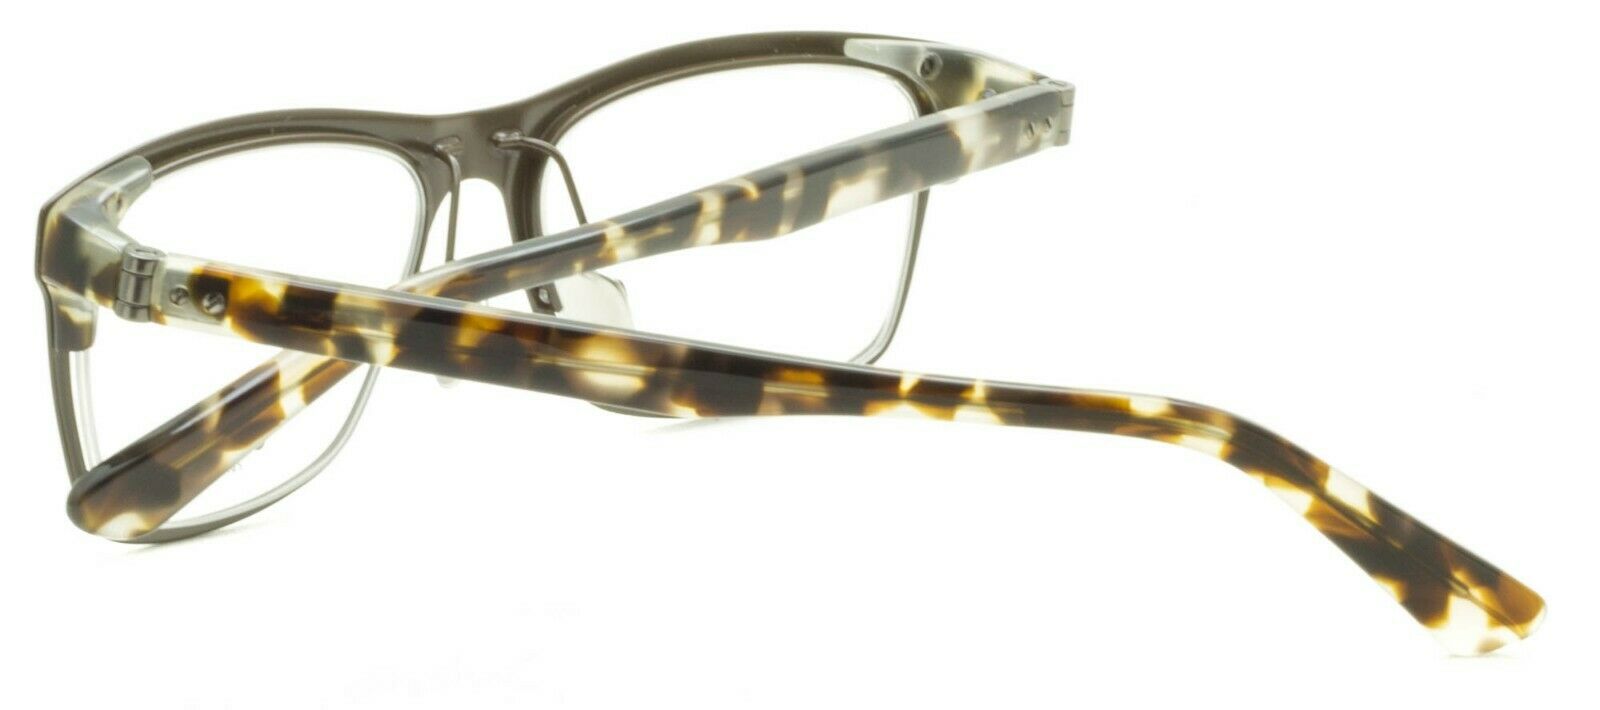 CALVIN KLEIN CK 8025 223 52mm Eyewear RX Optical FRAMES Eyeglasses Glasses - New